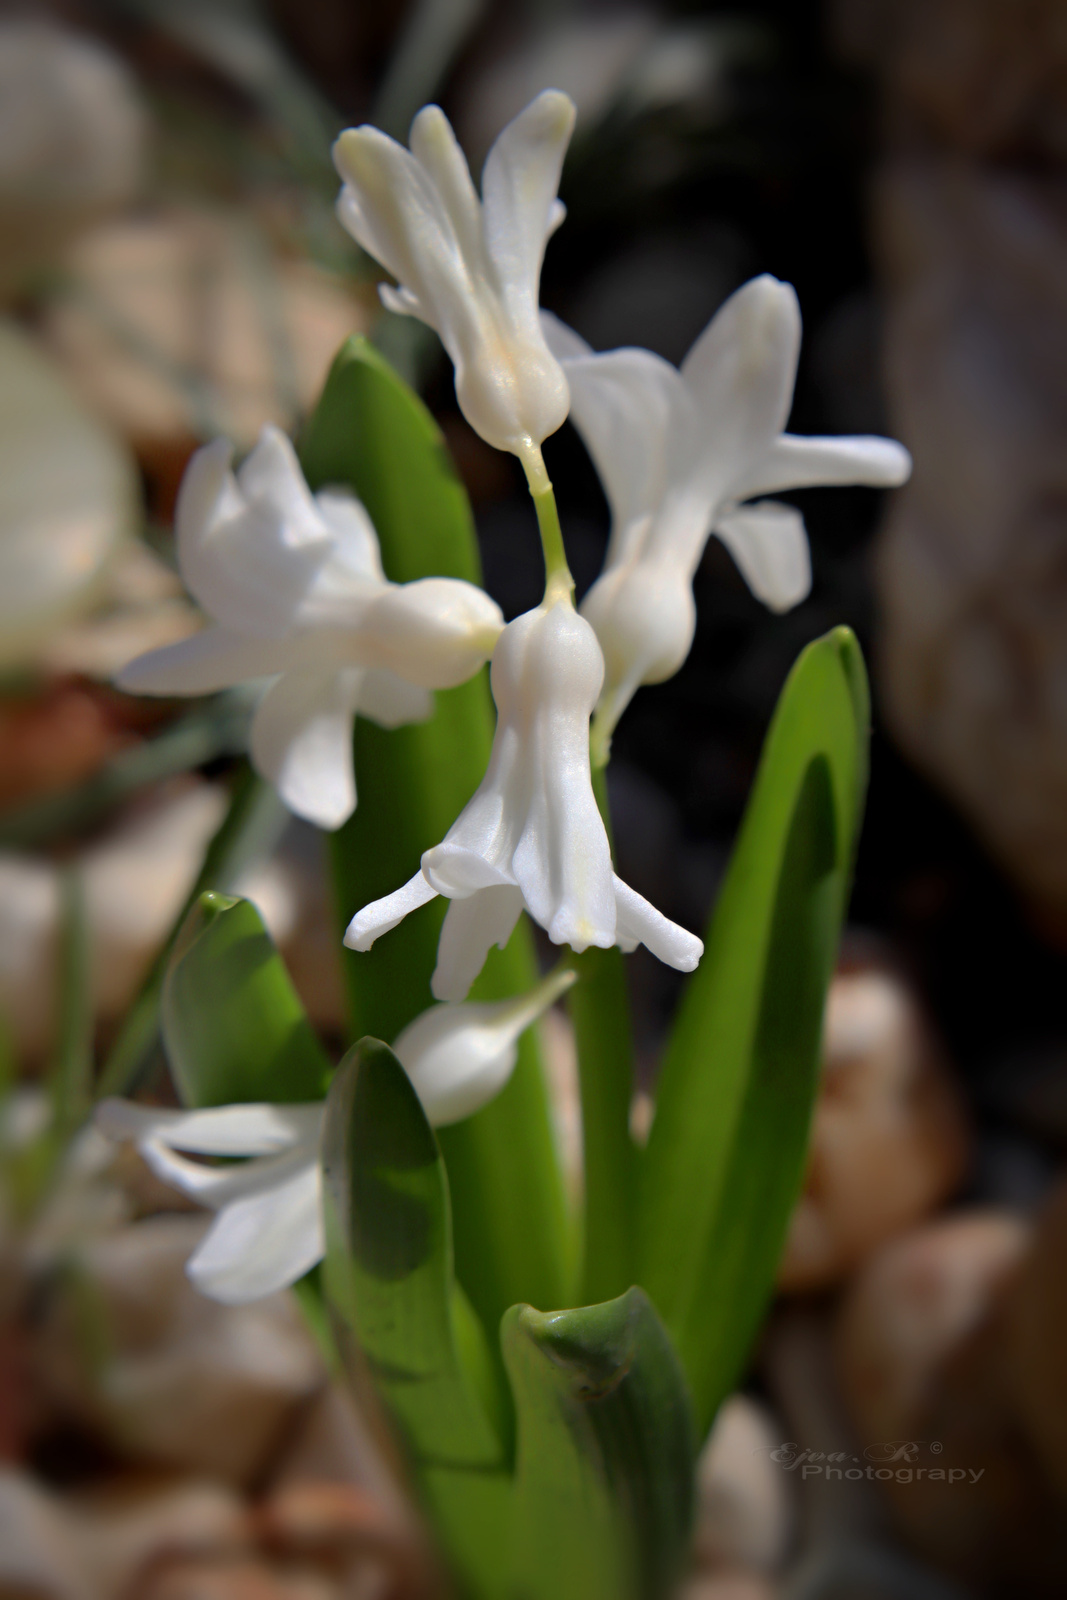 A kerti jácint (Hyacinthus orientalis)